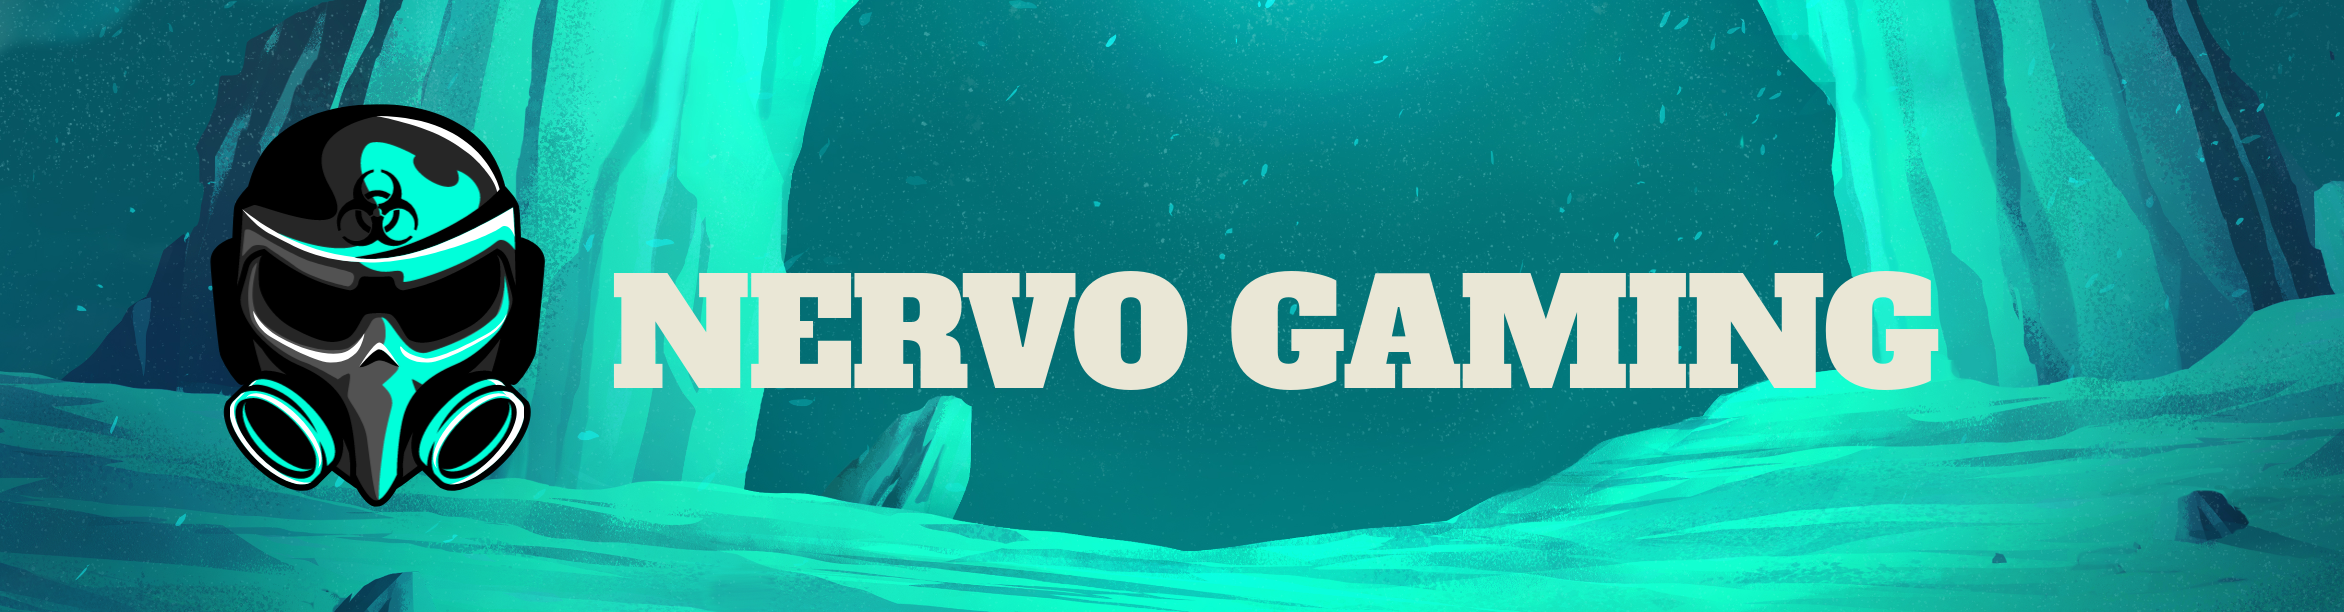 Nervo Gaming Top Banner